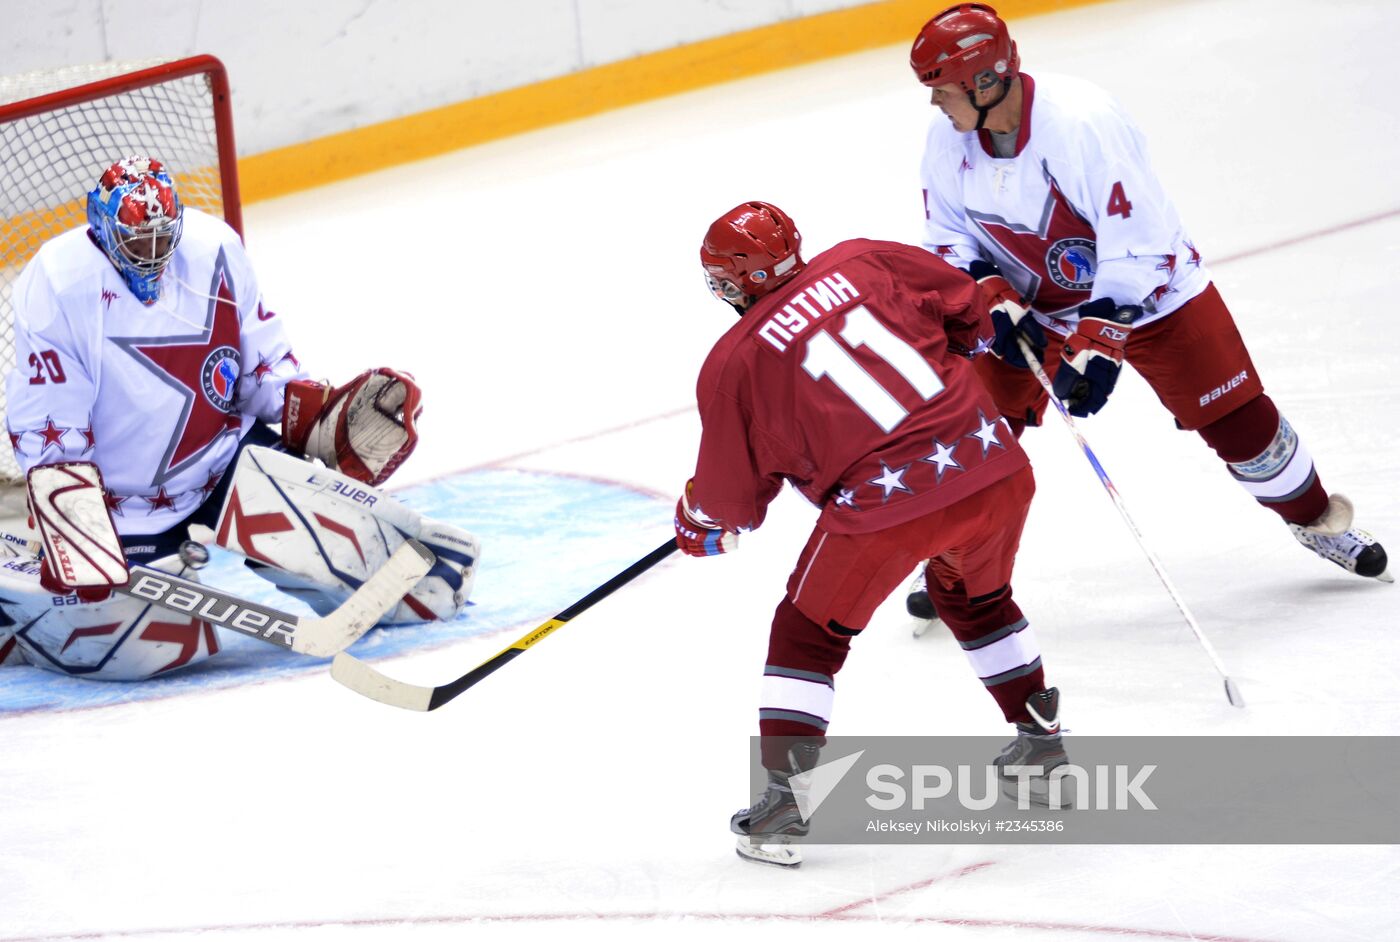 Vladimir Putin takes part in friendly hockey match